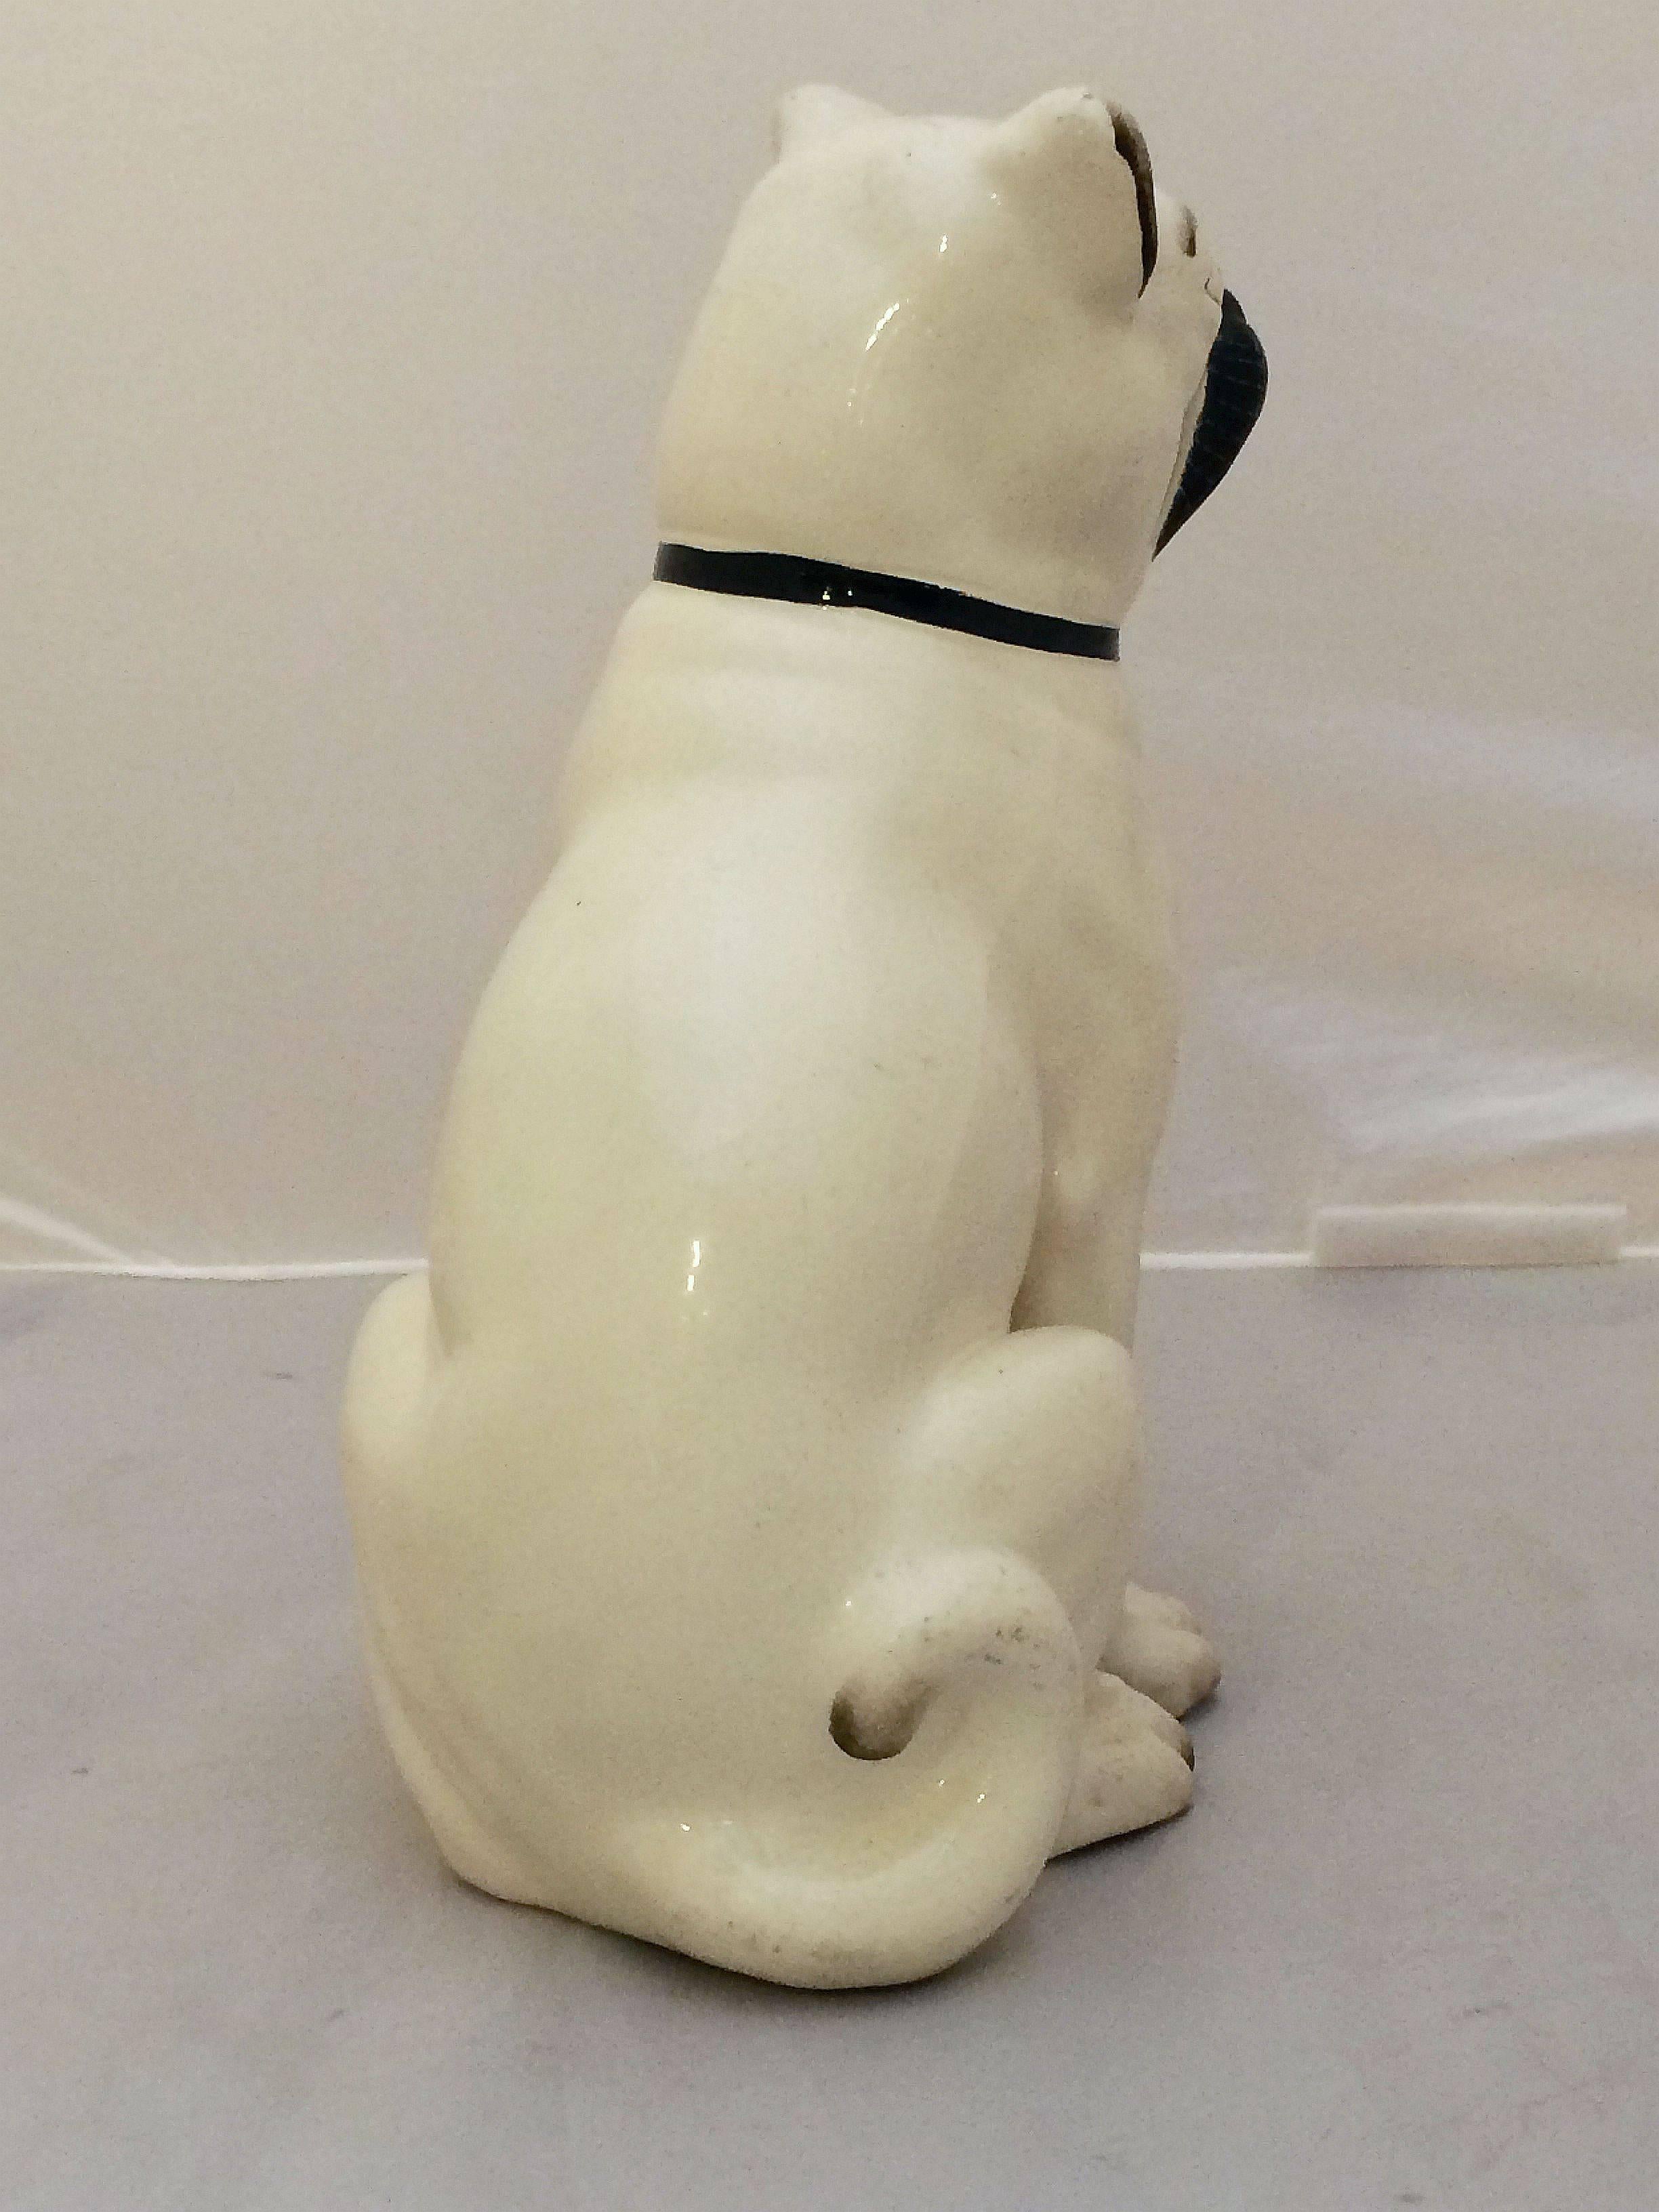 Glazed Staffordshire Pug from 19th Century, England